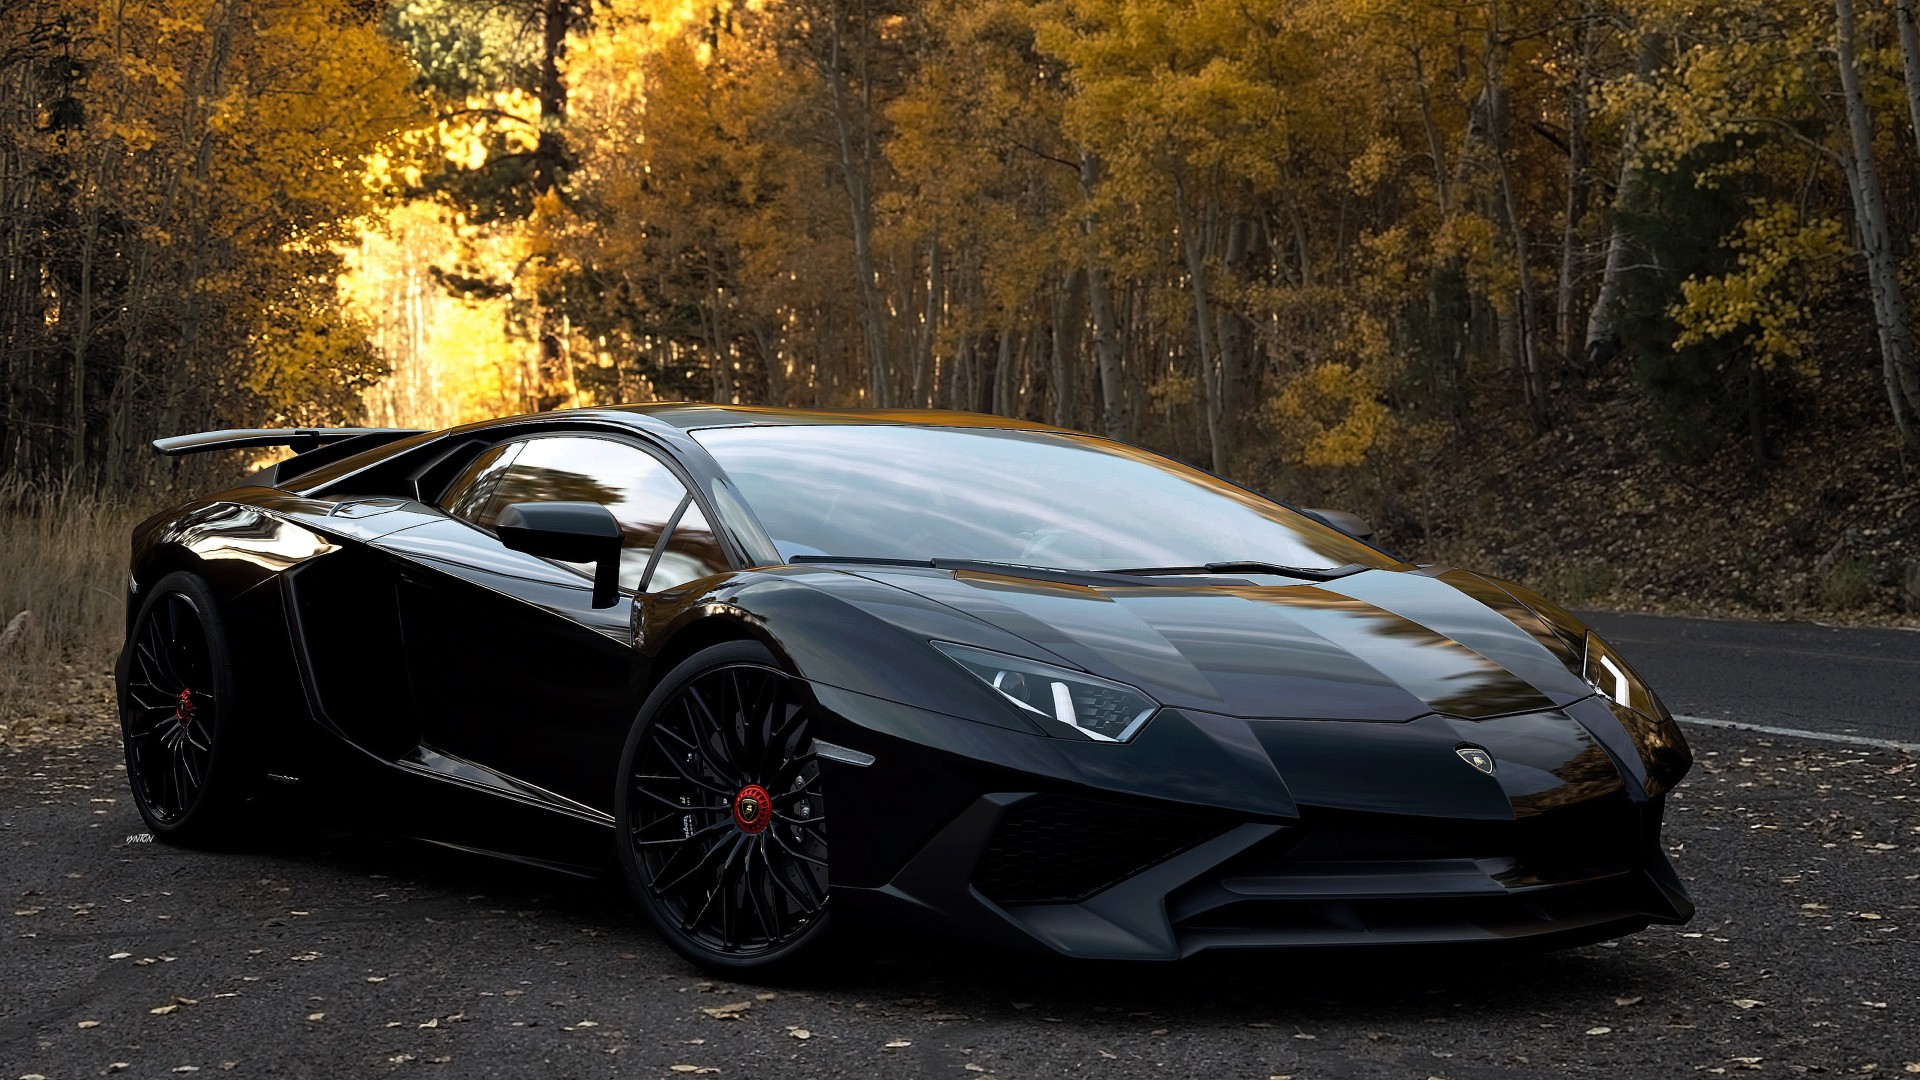 Black Lamborghini Aventador 4K Wallpaper | HD Car Wallpapers | ID #14958